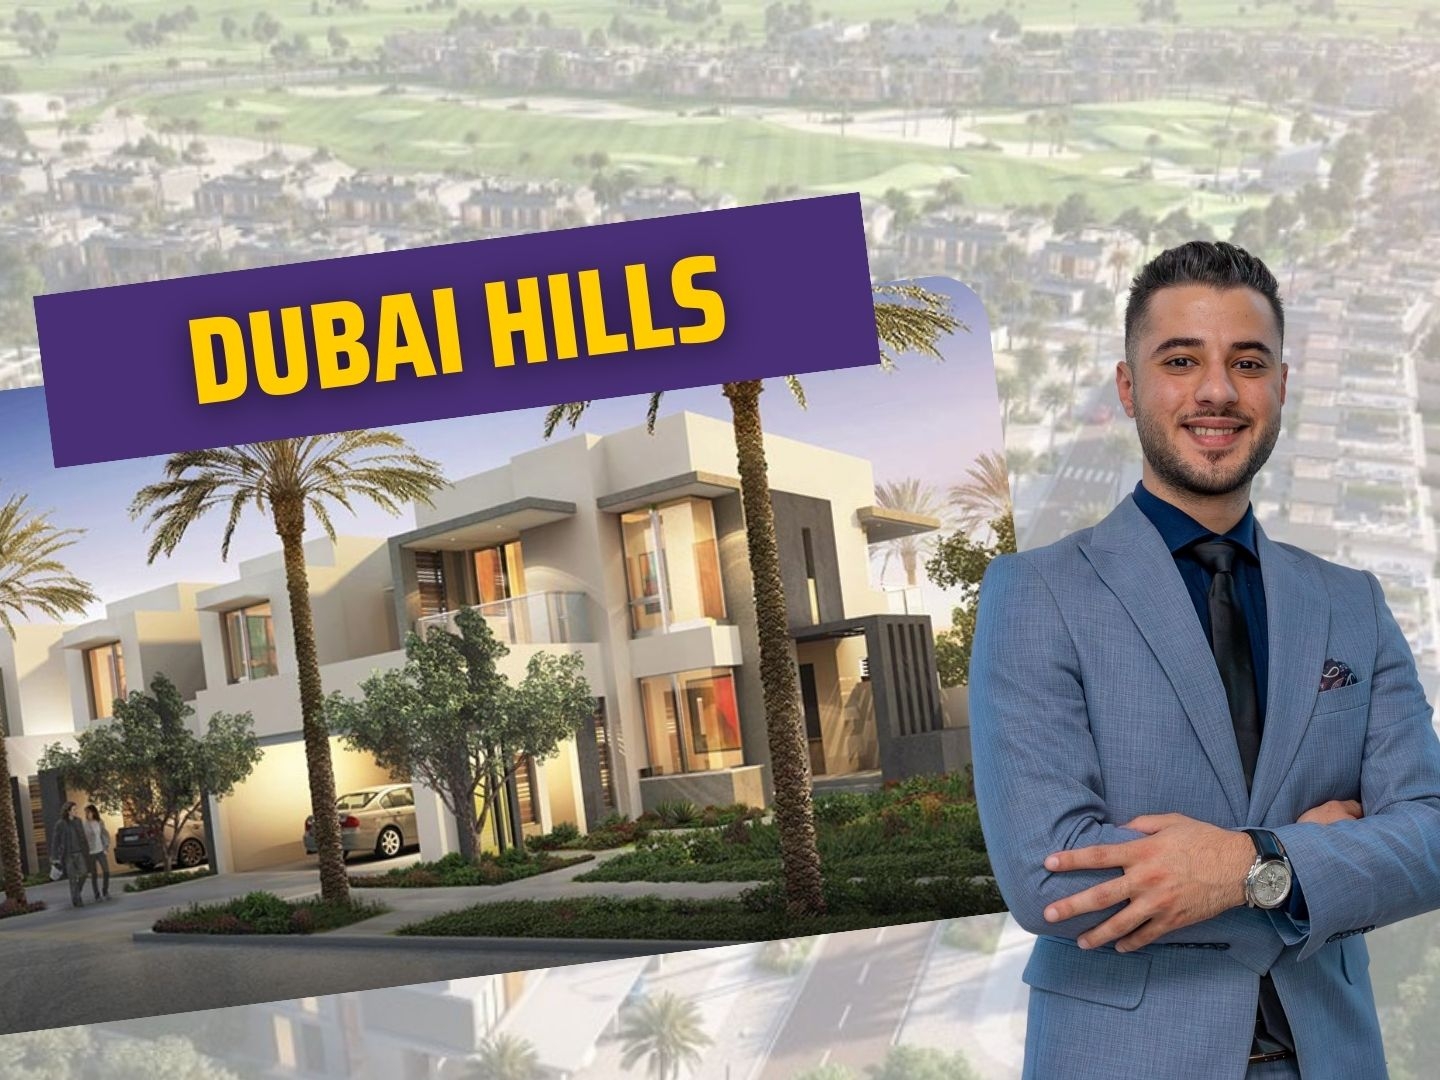 Dubai Hills